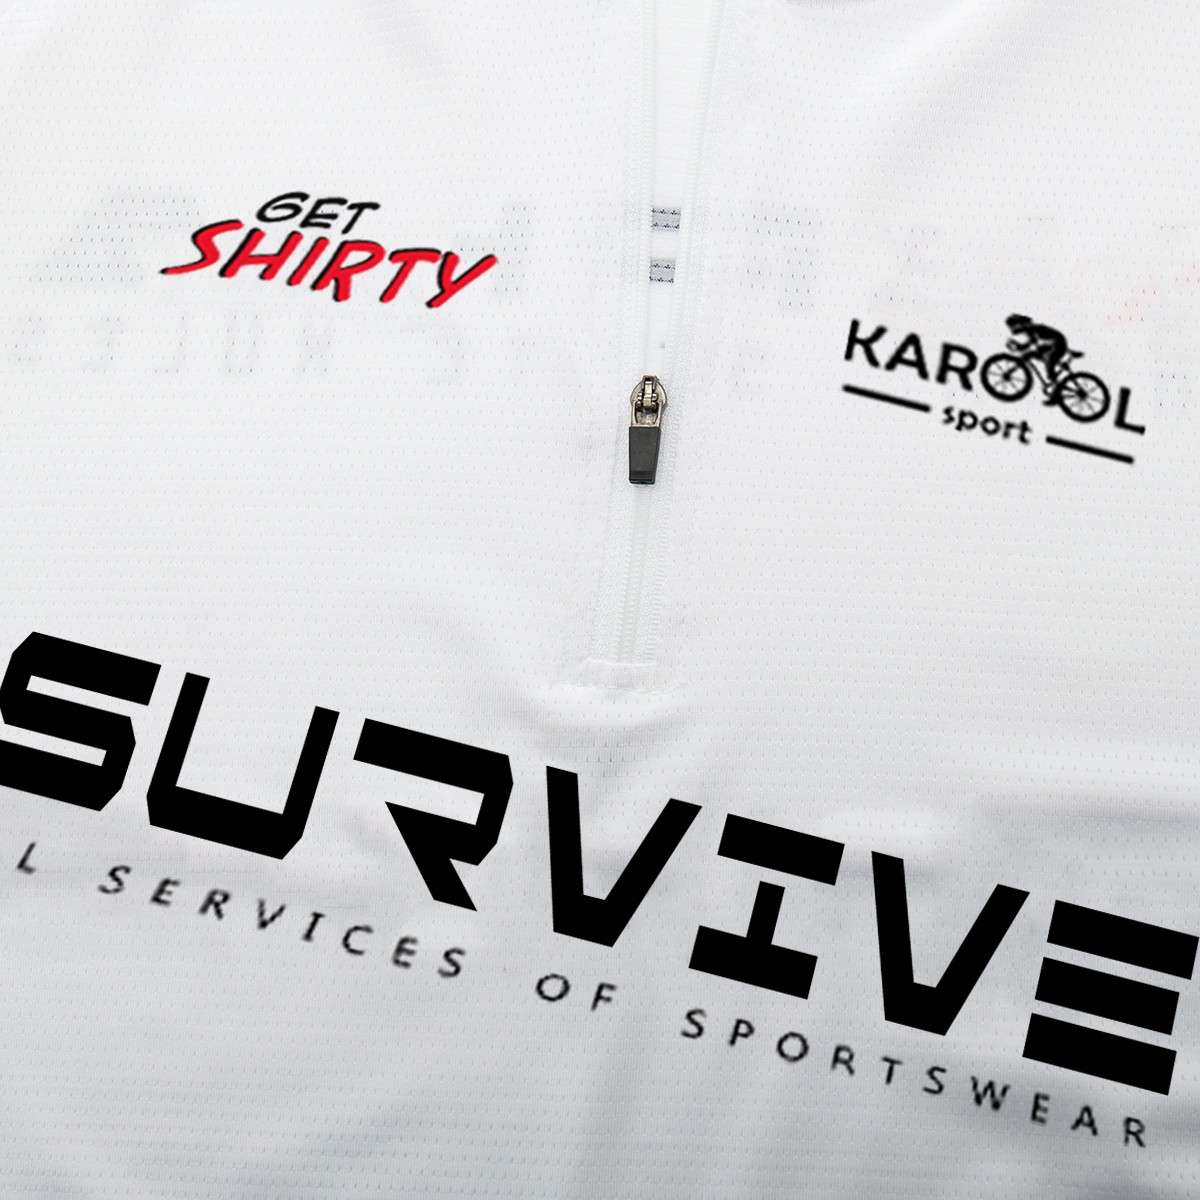 Karool top running t shirt supplier for sporting-6